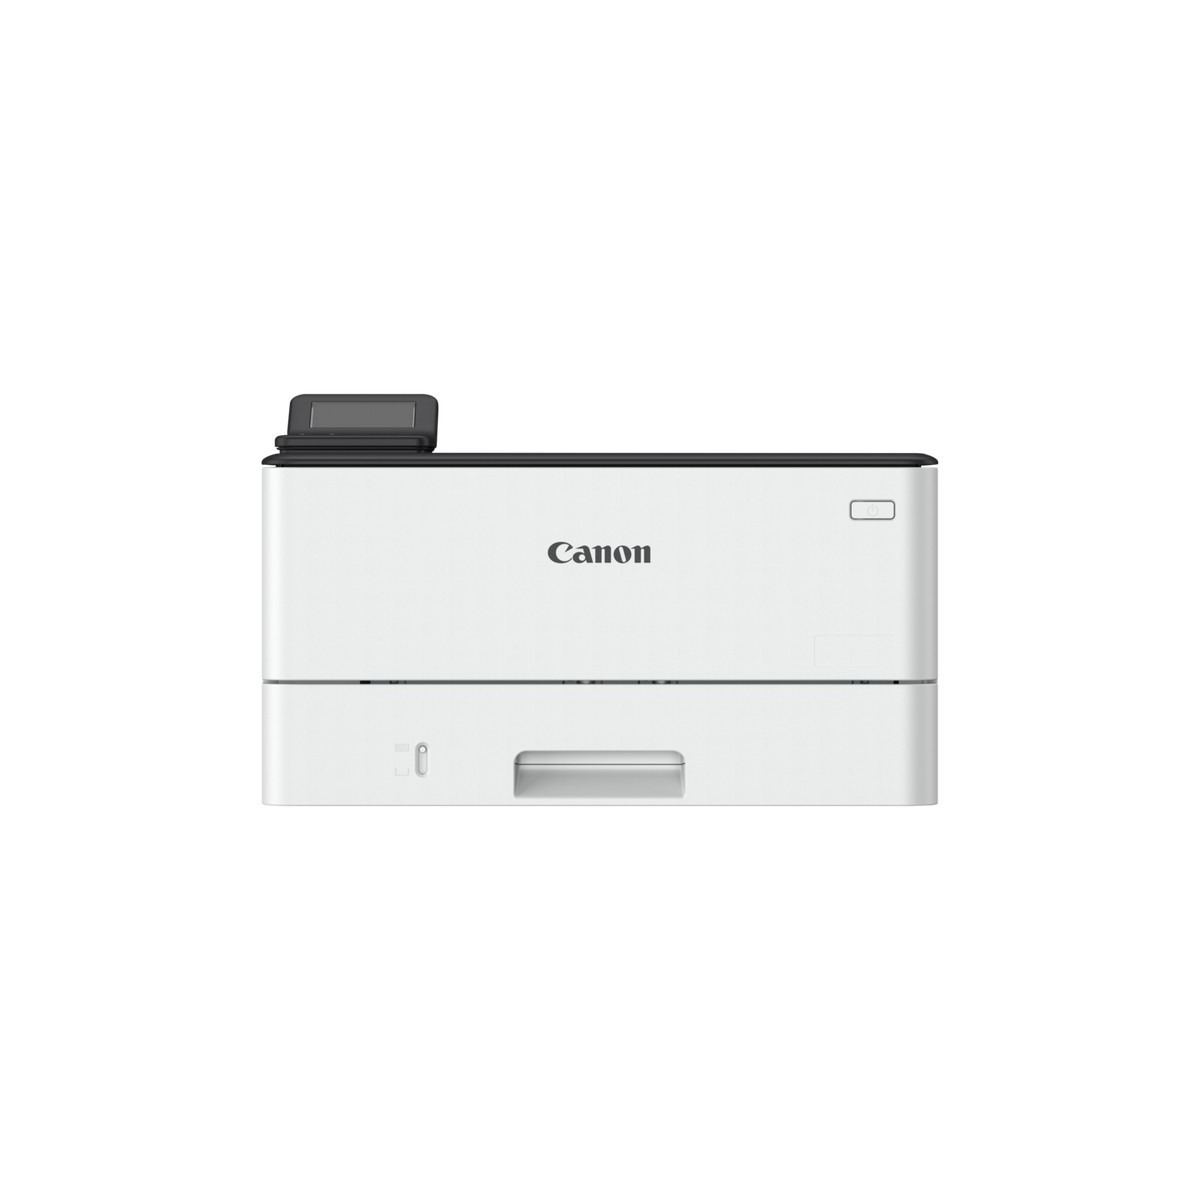 Canon i-SENSYS LBP246dw - Laser - 1200 x 1200 DPI - A4 - 40 ppm - Duplex printing - Black - White